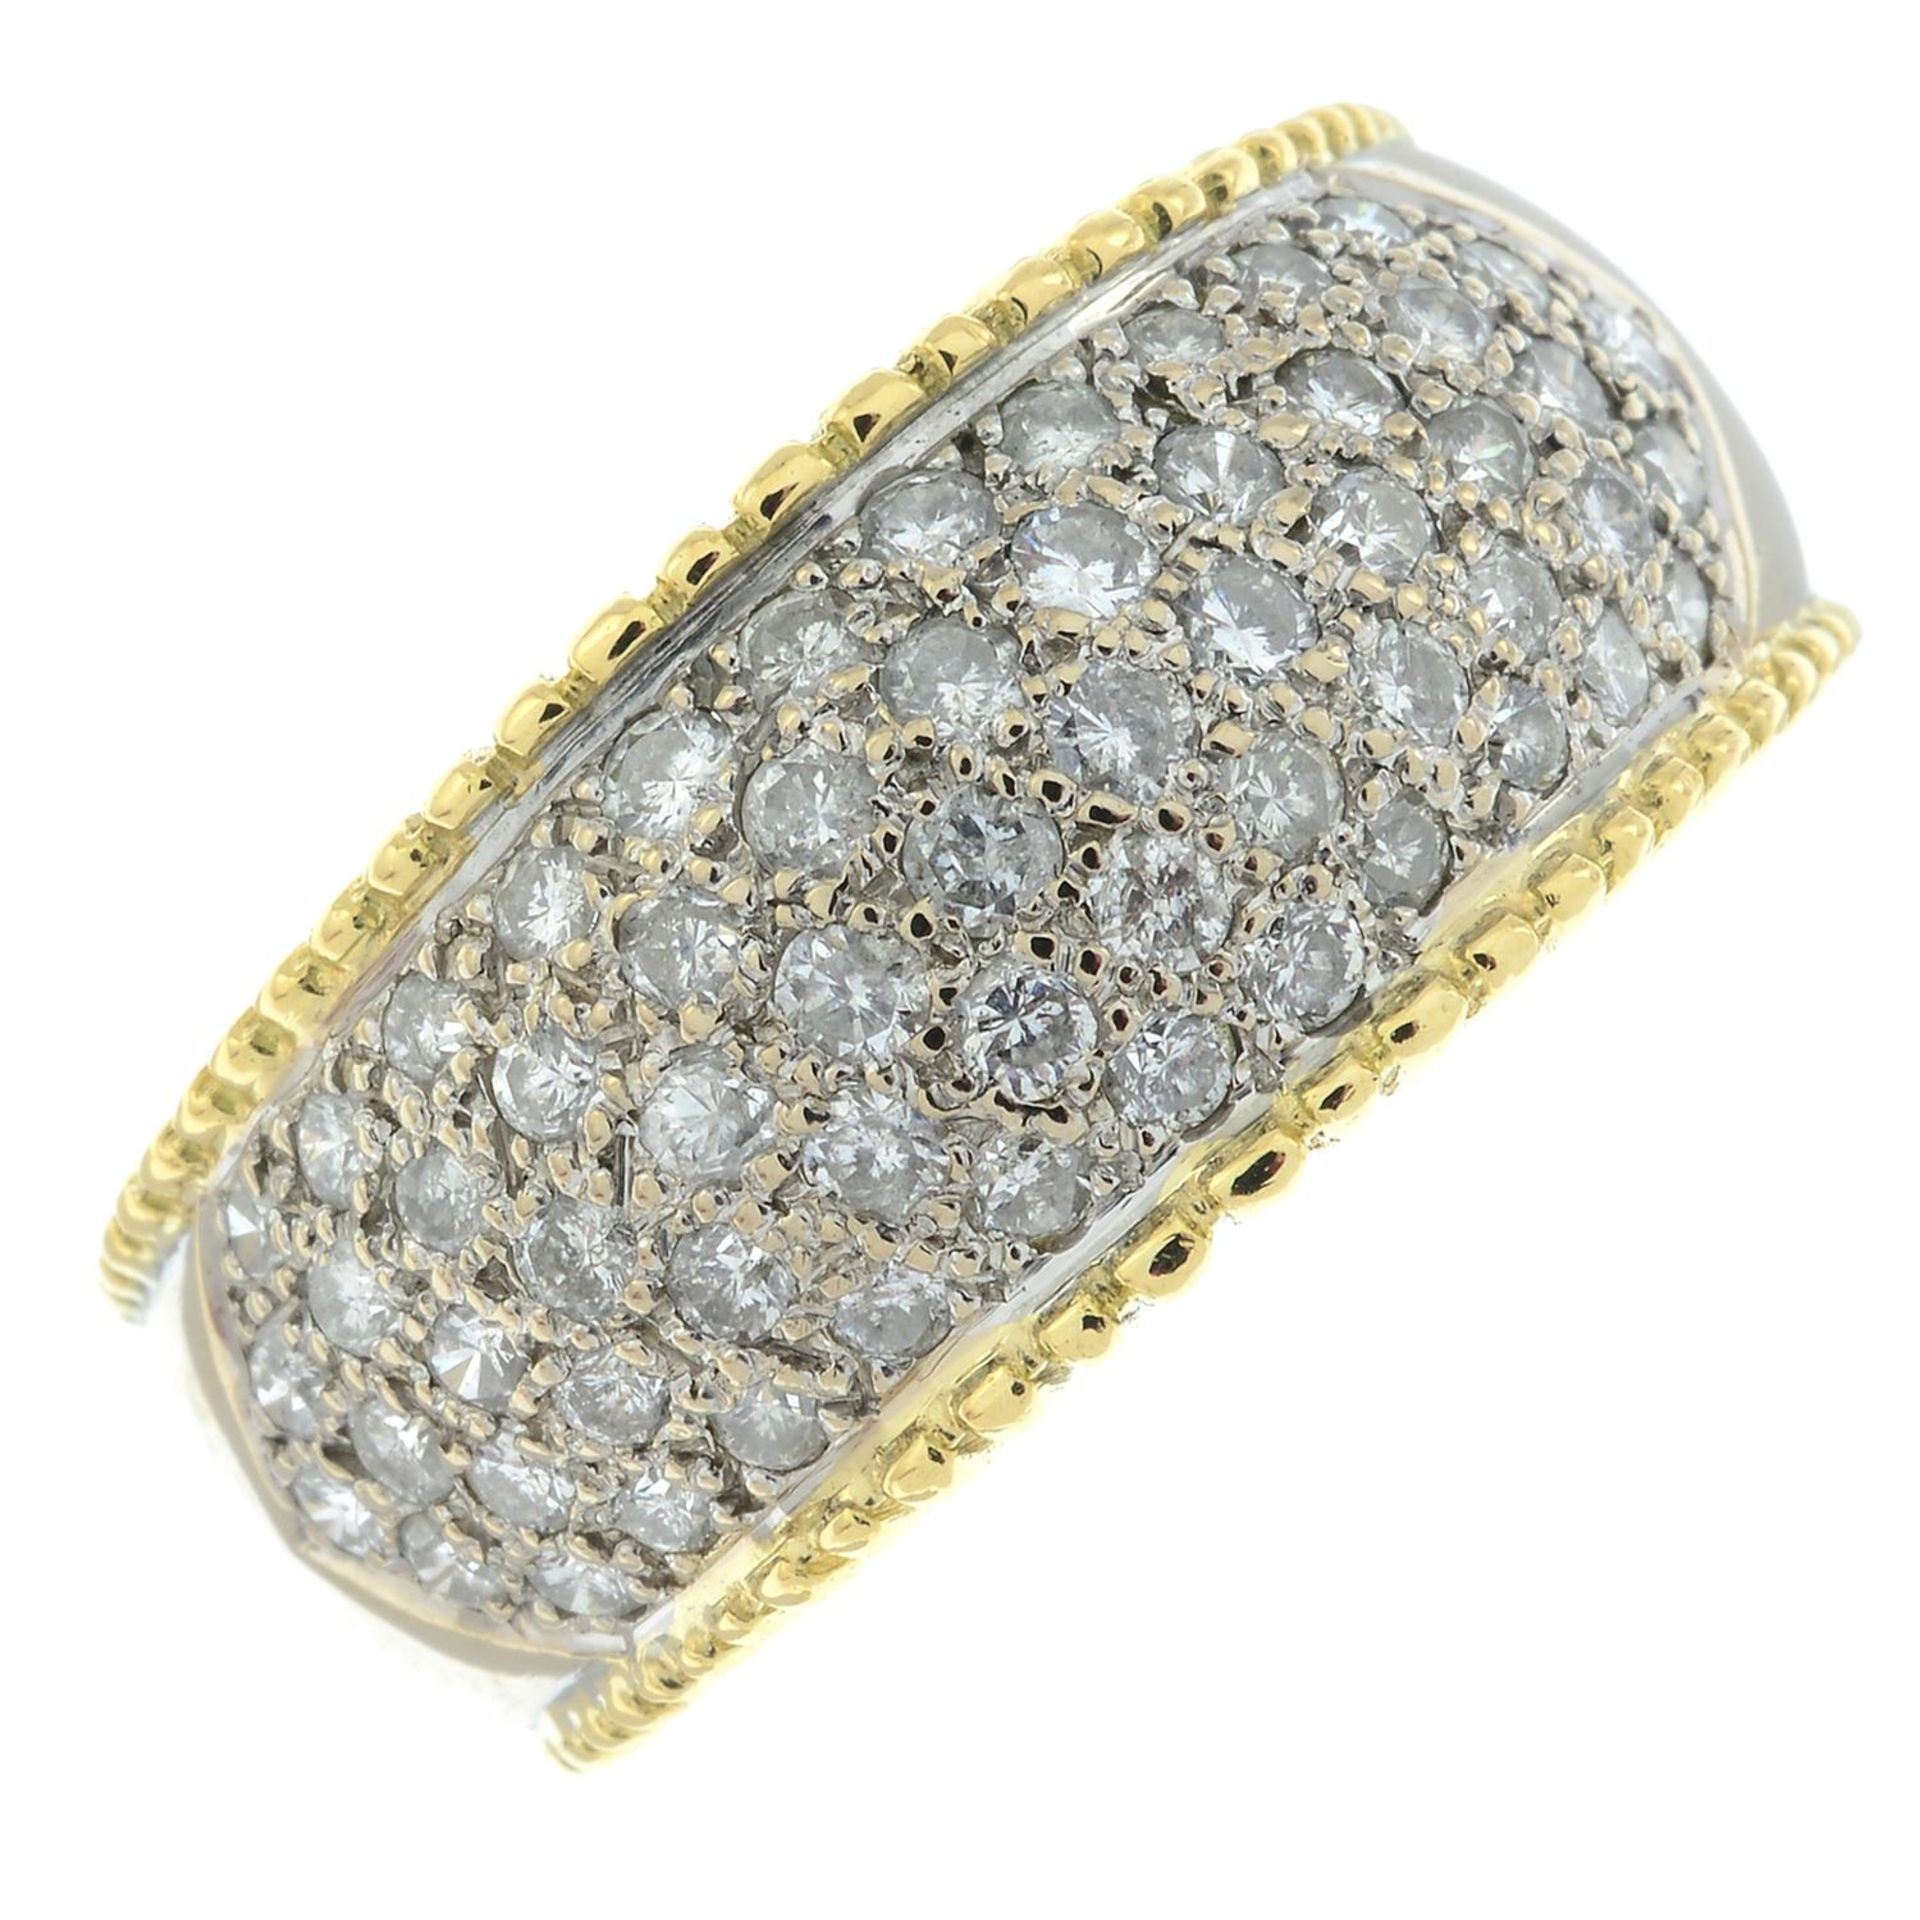 An 18ct gold pavé-set diamond dress ring.